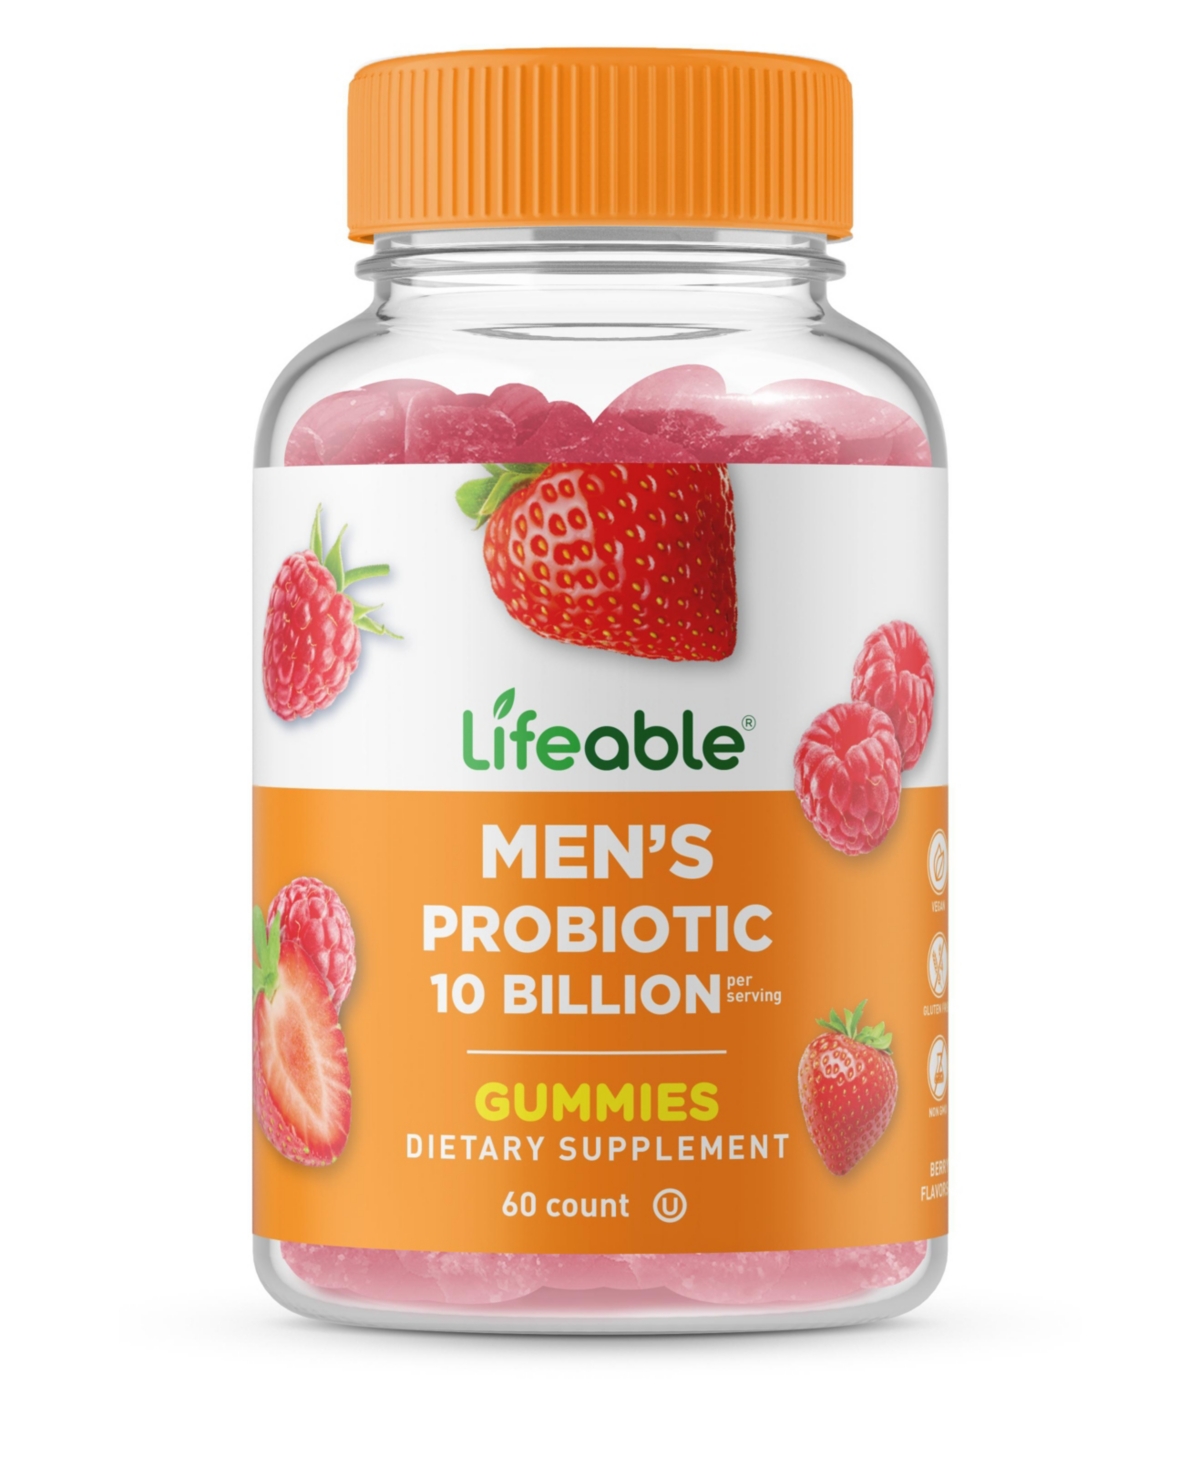 Probiotics for Men 10 Billion Cfu Gummies - Healthy Digestive And Immune Functions - Great Tasting, Dietary Supplement Vitamins - 60 Gummies